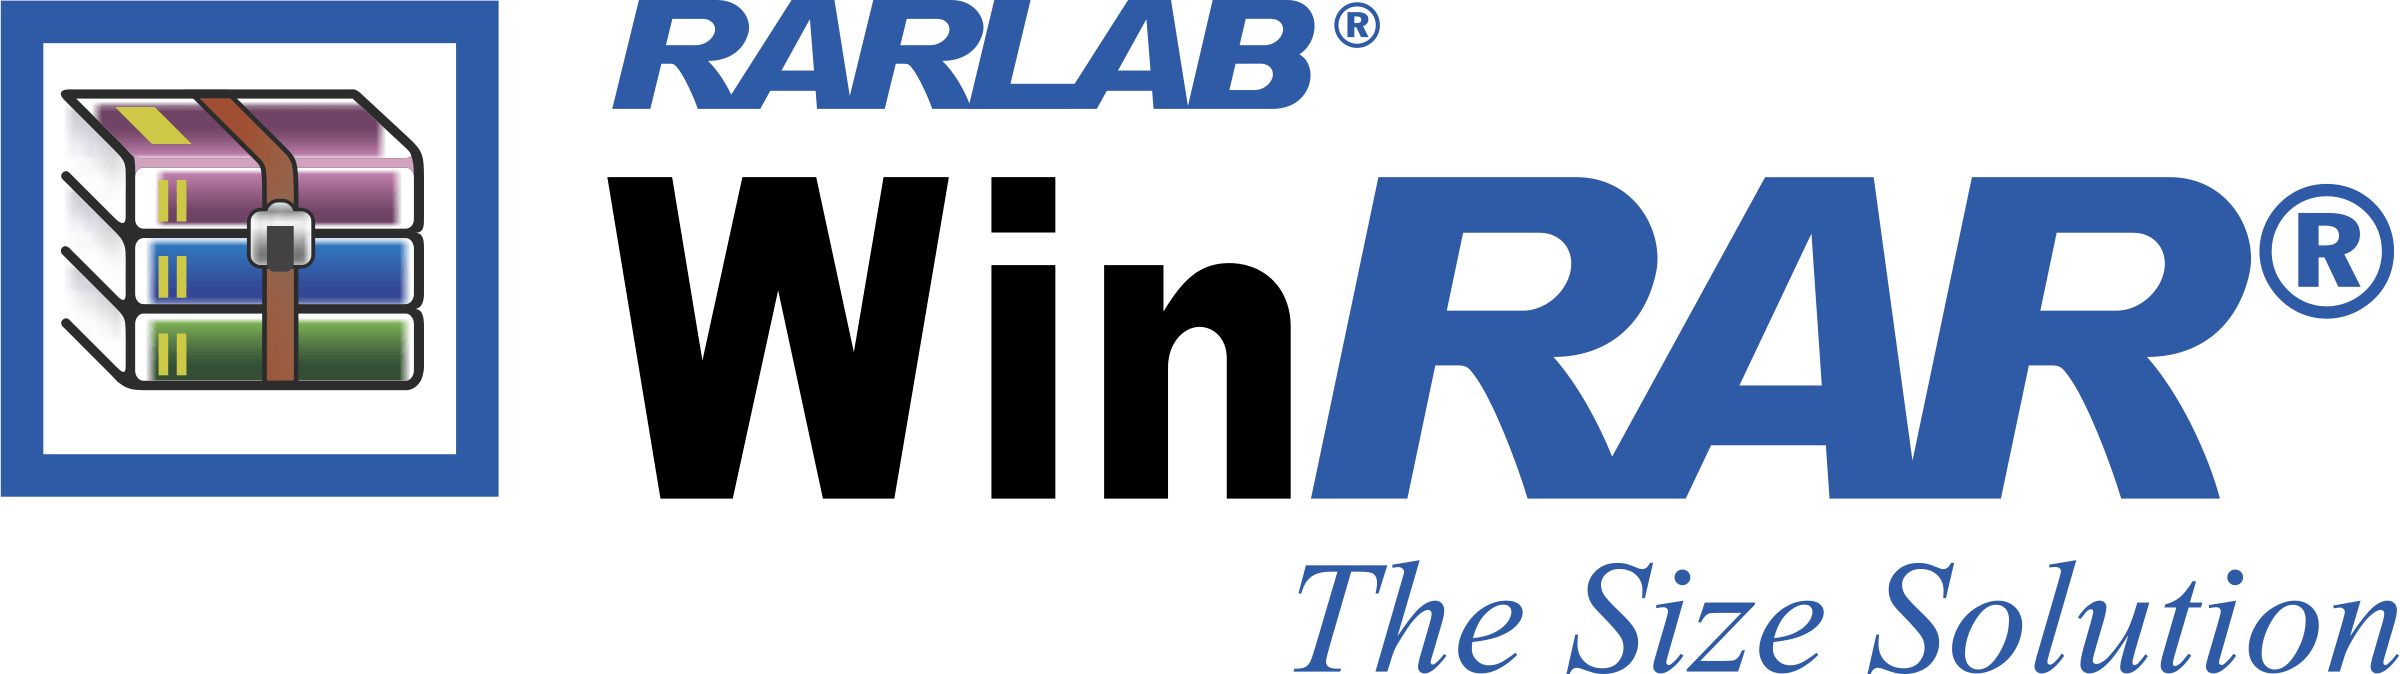 winRAR Logo - WinRAR Logo PNG Transparent & SVG Vector - Freebie Supply